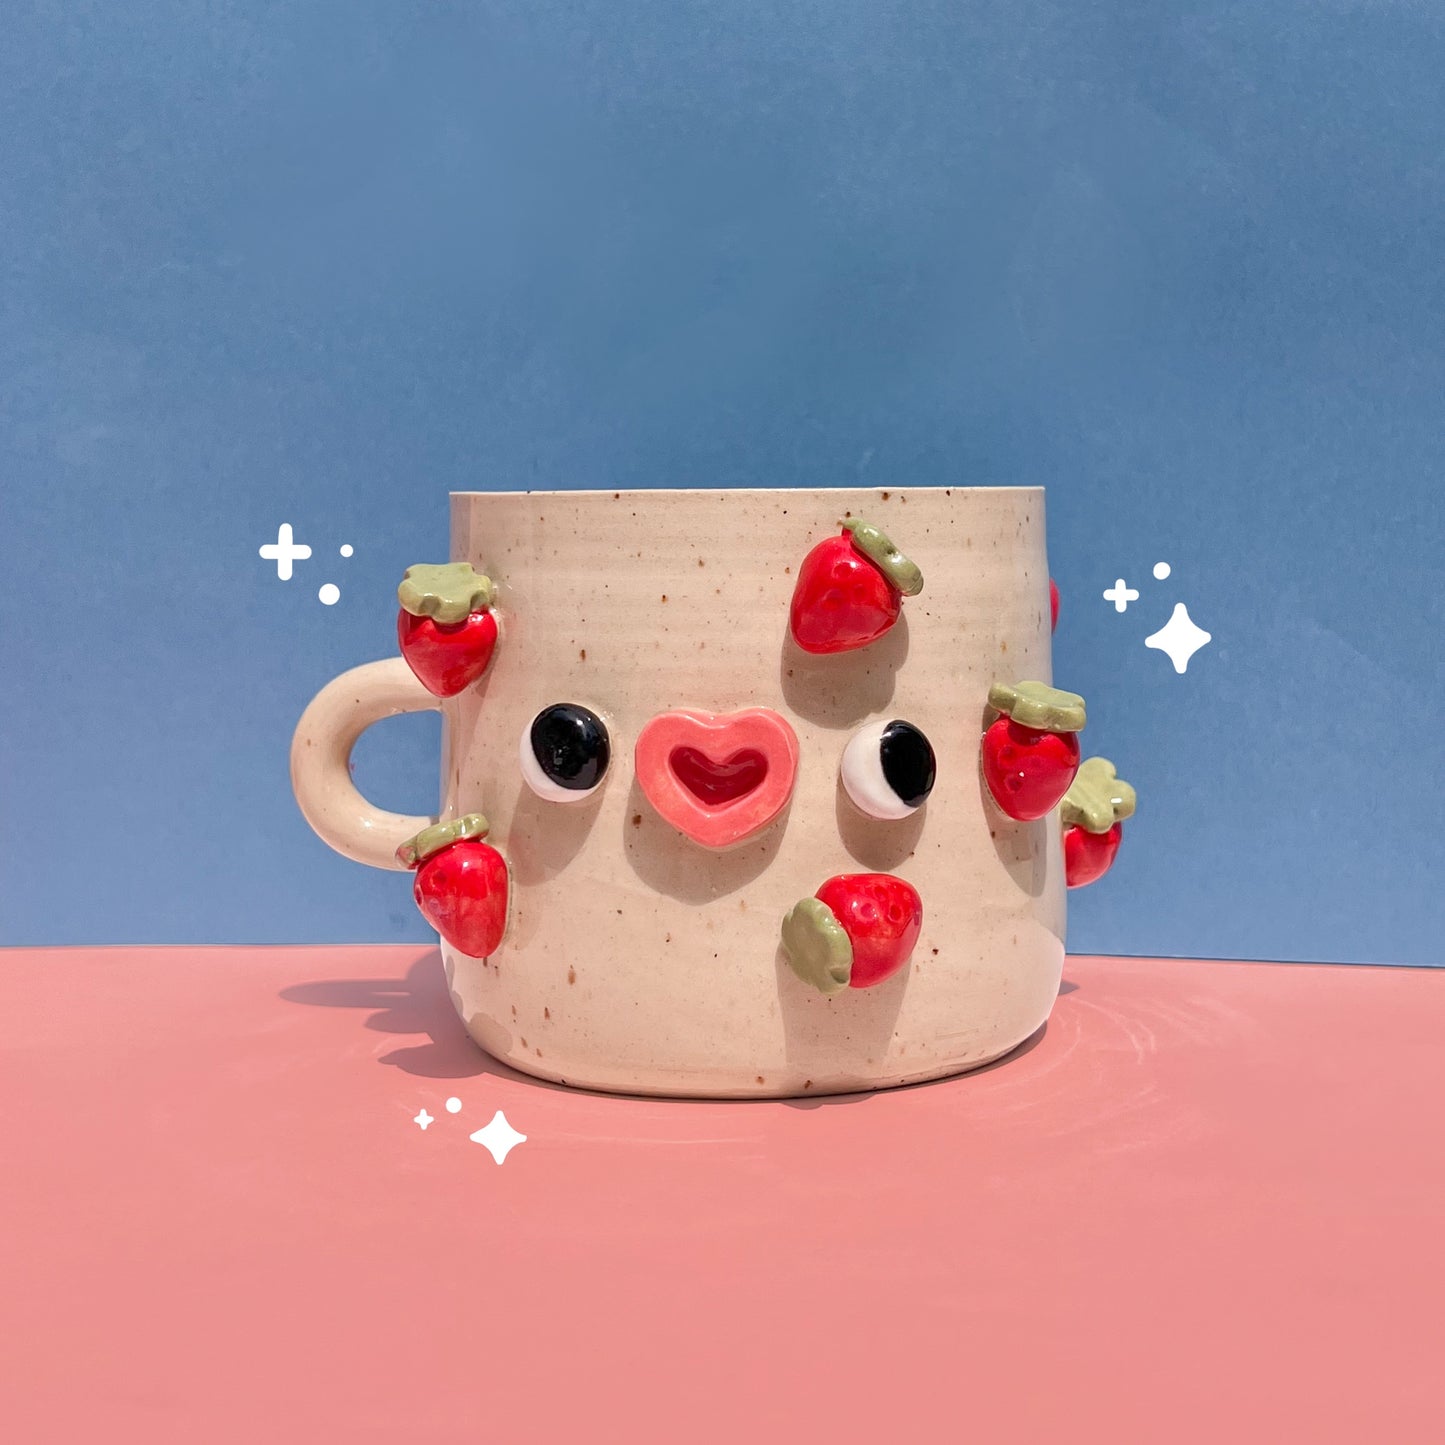 Strawberry mug